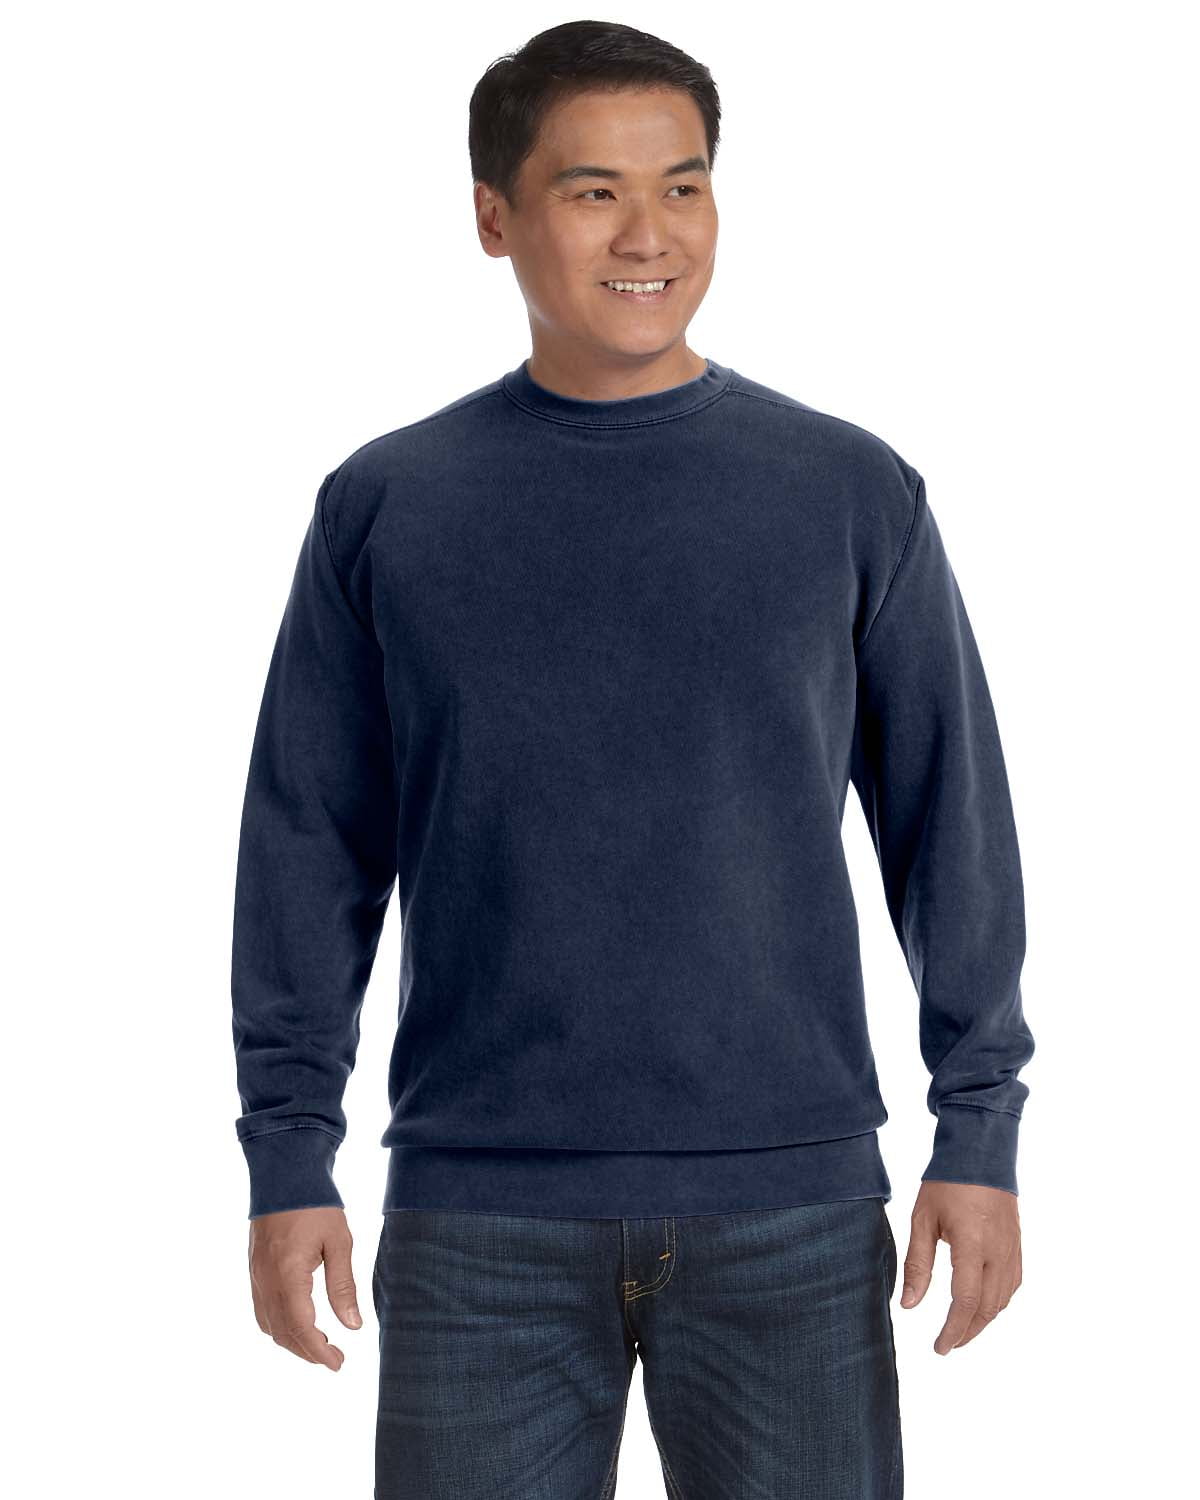 The Comfort Colors Adult Crewneck Sweatshirt - TRUE NAVY - M - Walmart.com